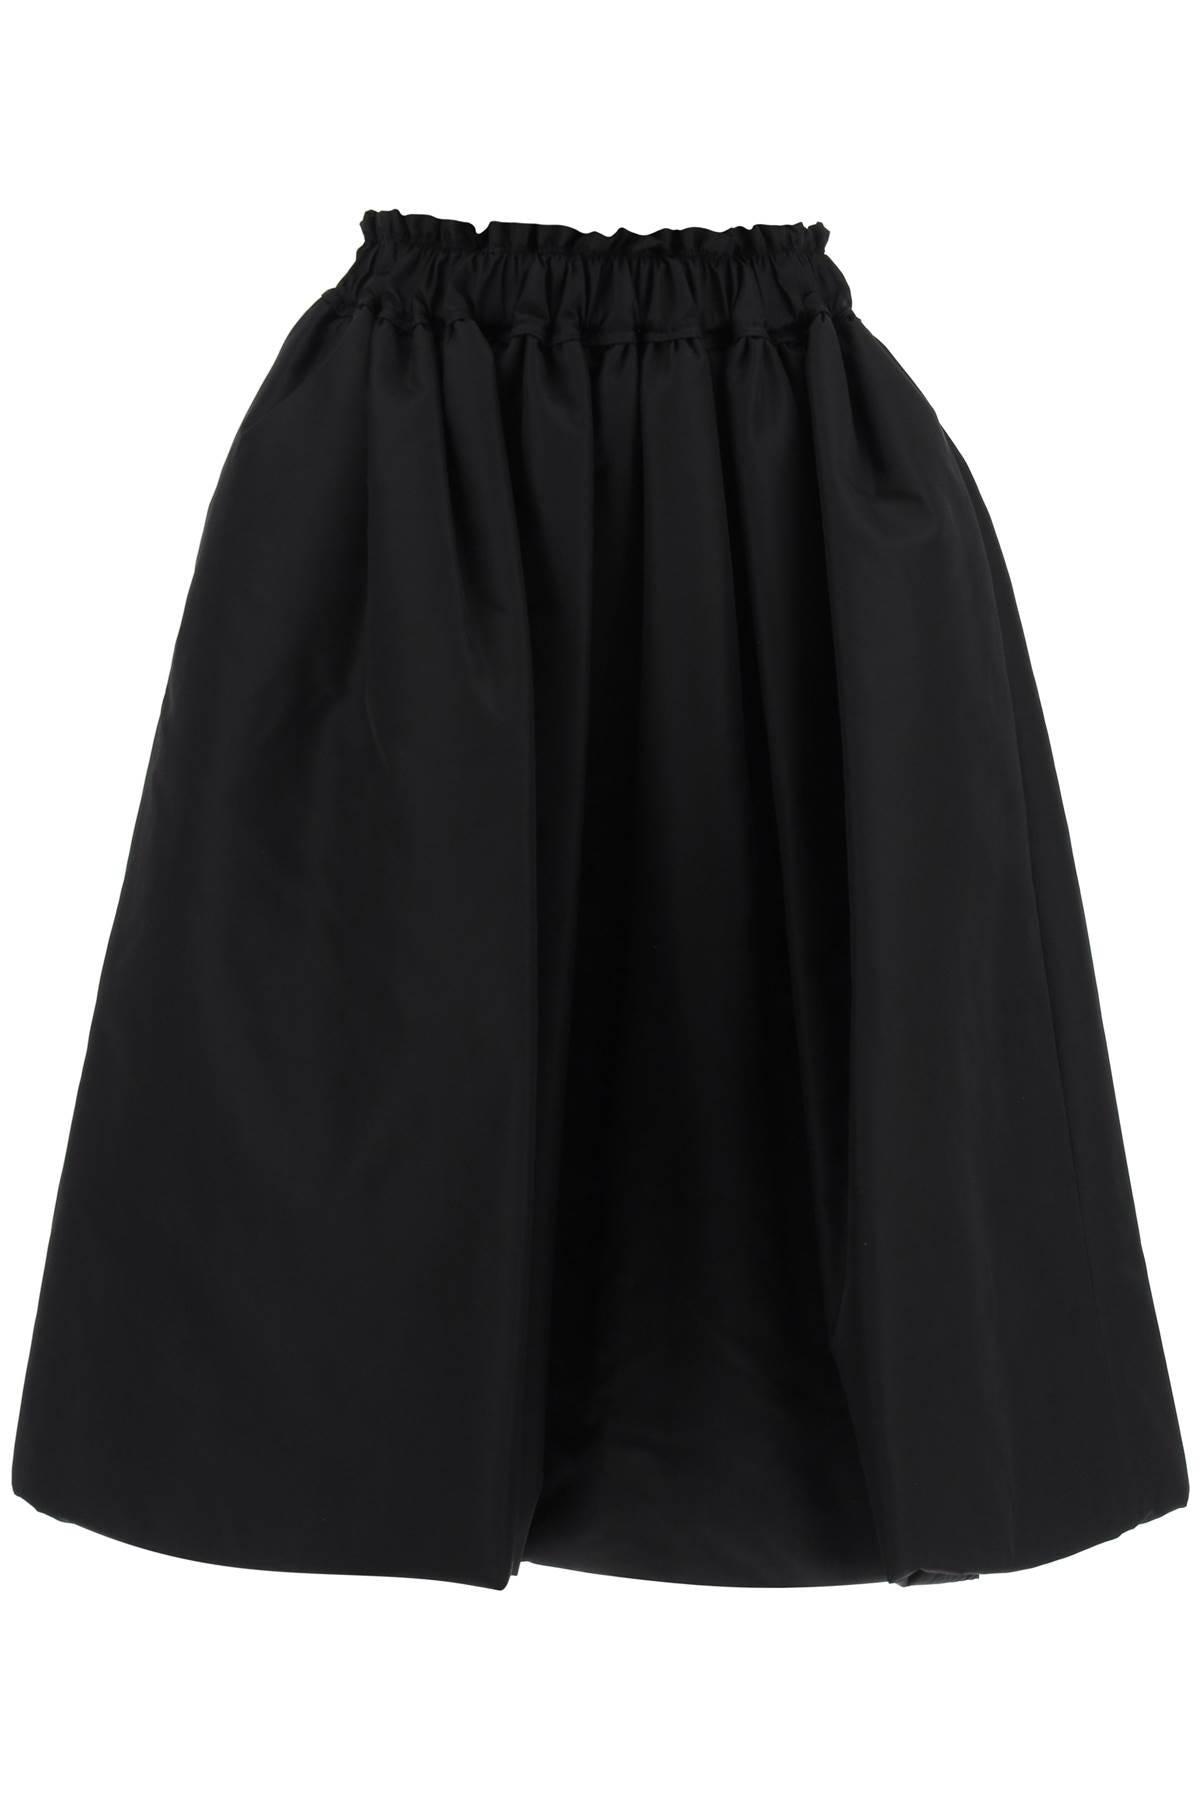 Simone Rocha Padded Taffeta Midi Skirt in Black | Lyst